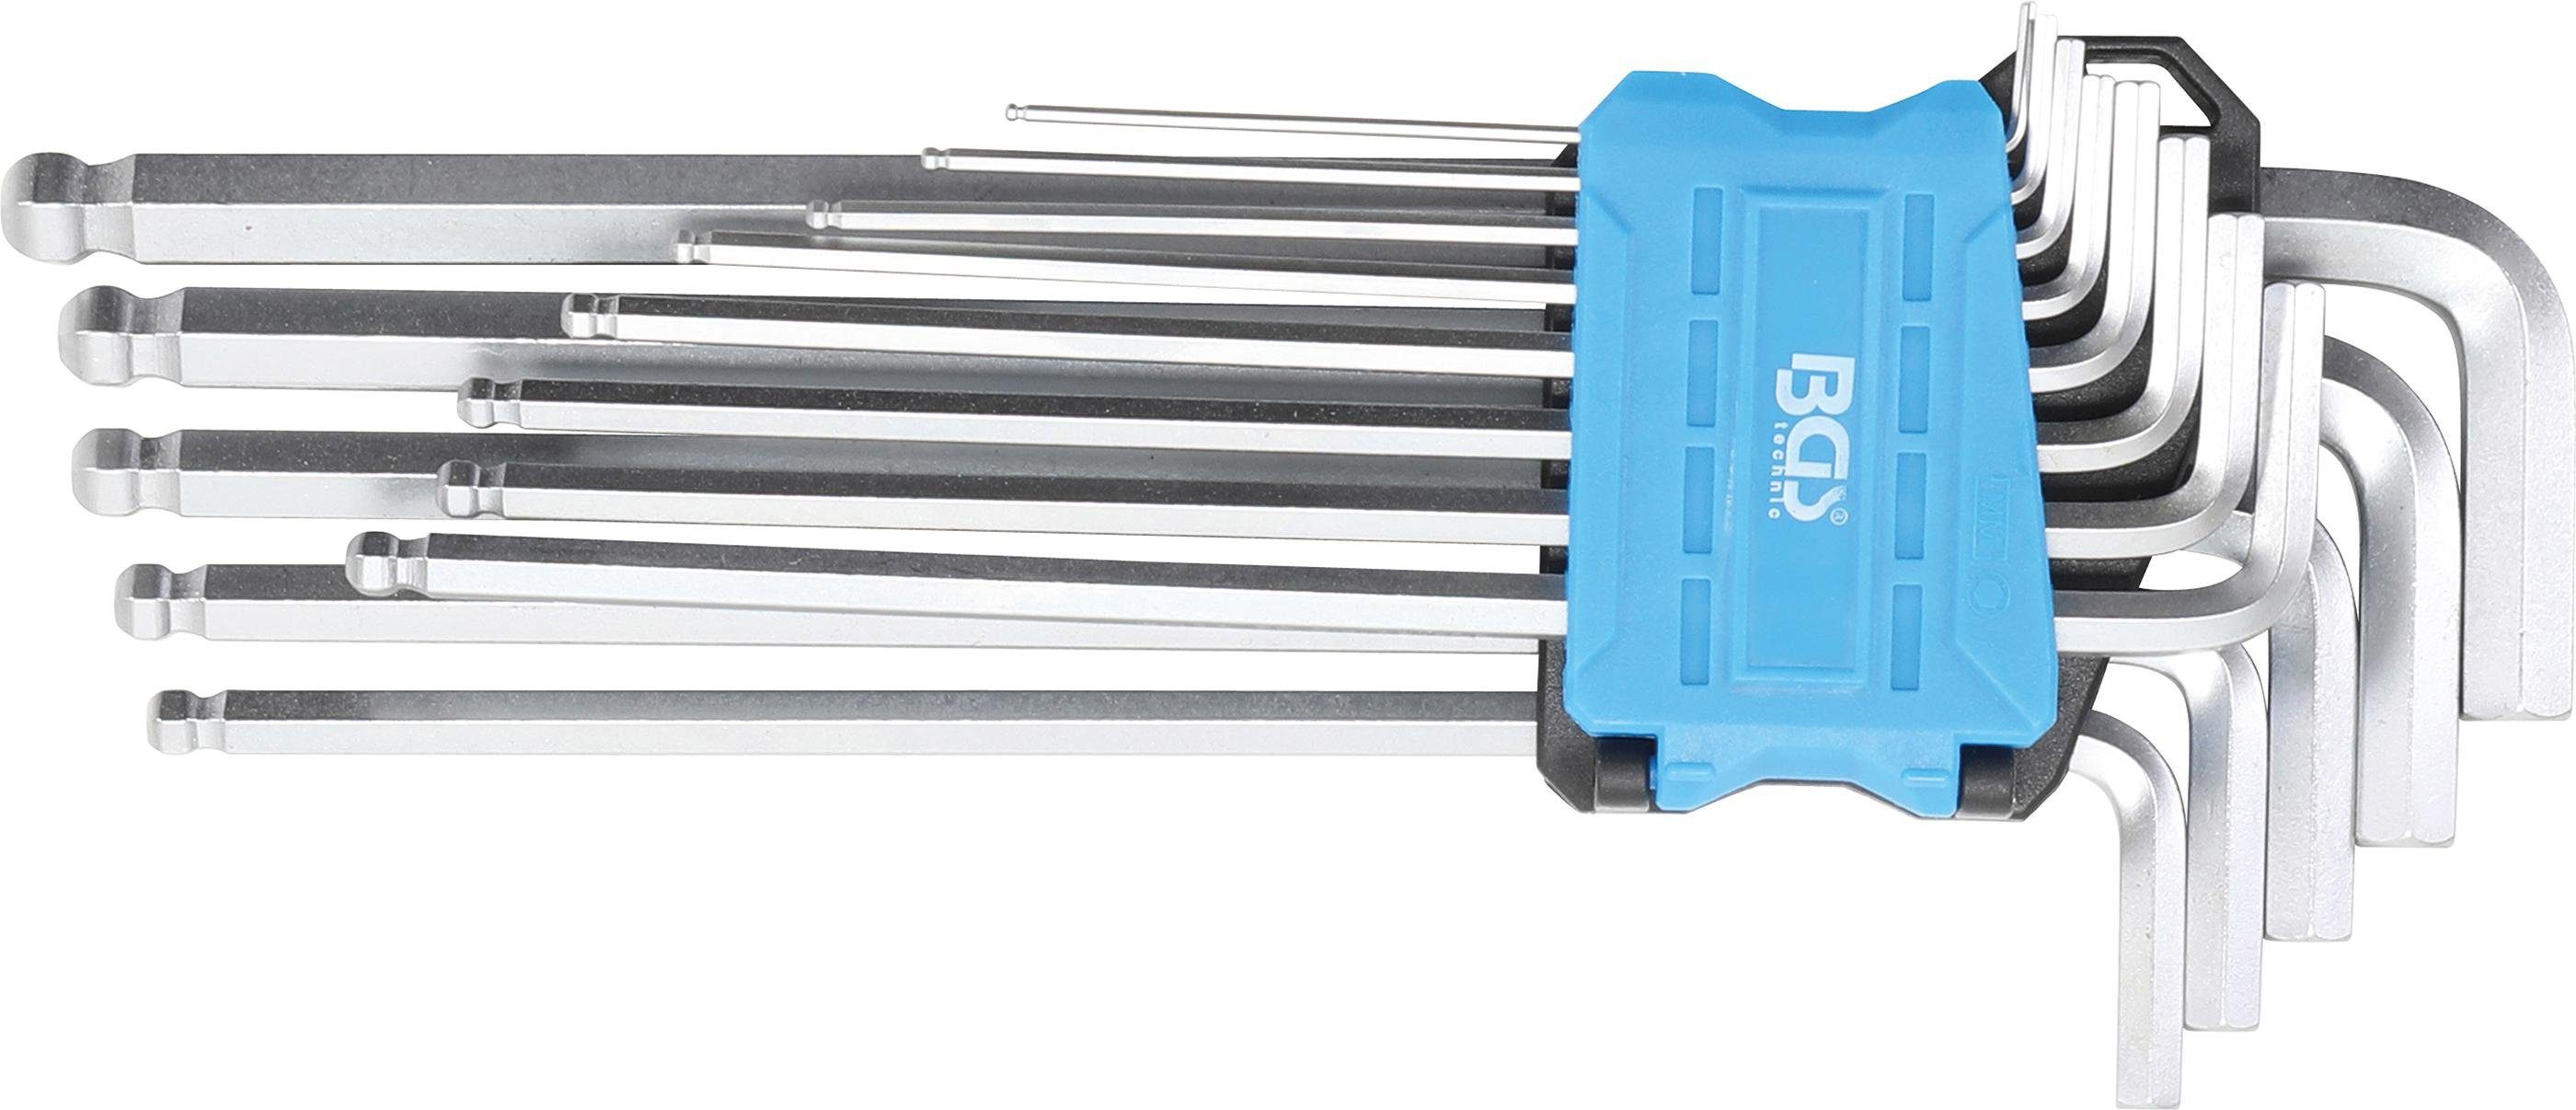 BGS technic Bit-Schraubendreher Winkelschlüssel-Satz, extra lang, Innensechskant / Innensechskant mit Kugelkopf 1,5 - 10 mm, 13-tlg.